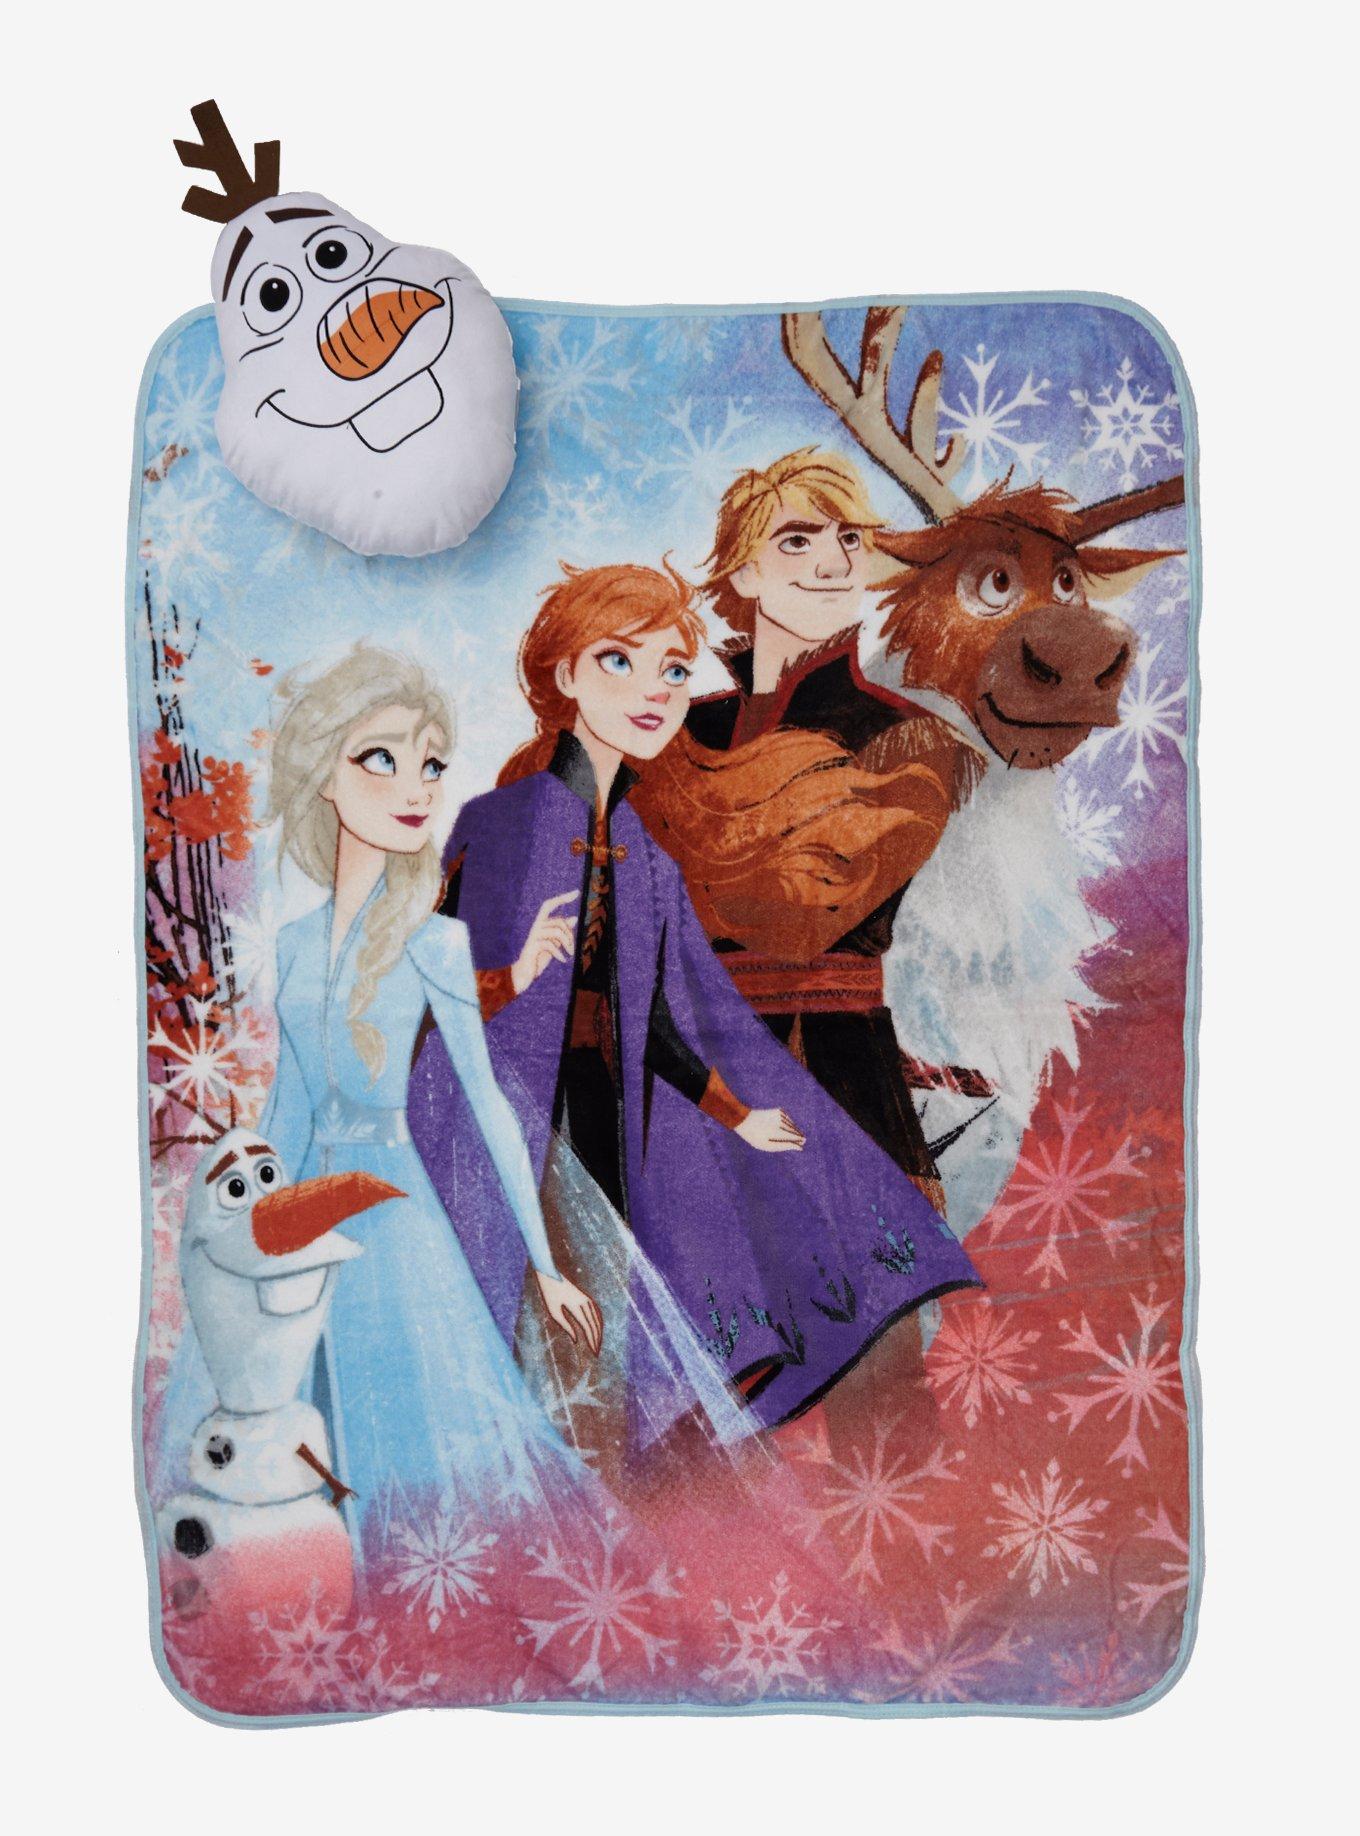 Disney Frozen 2 Olaf Pillow & Group Throw Blanket Set, , hi-res